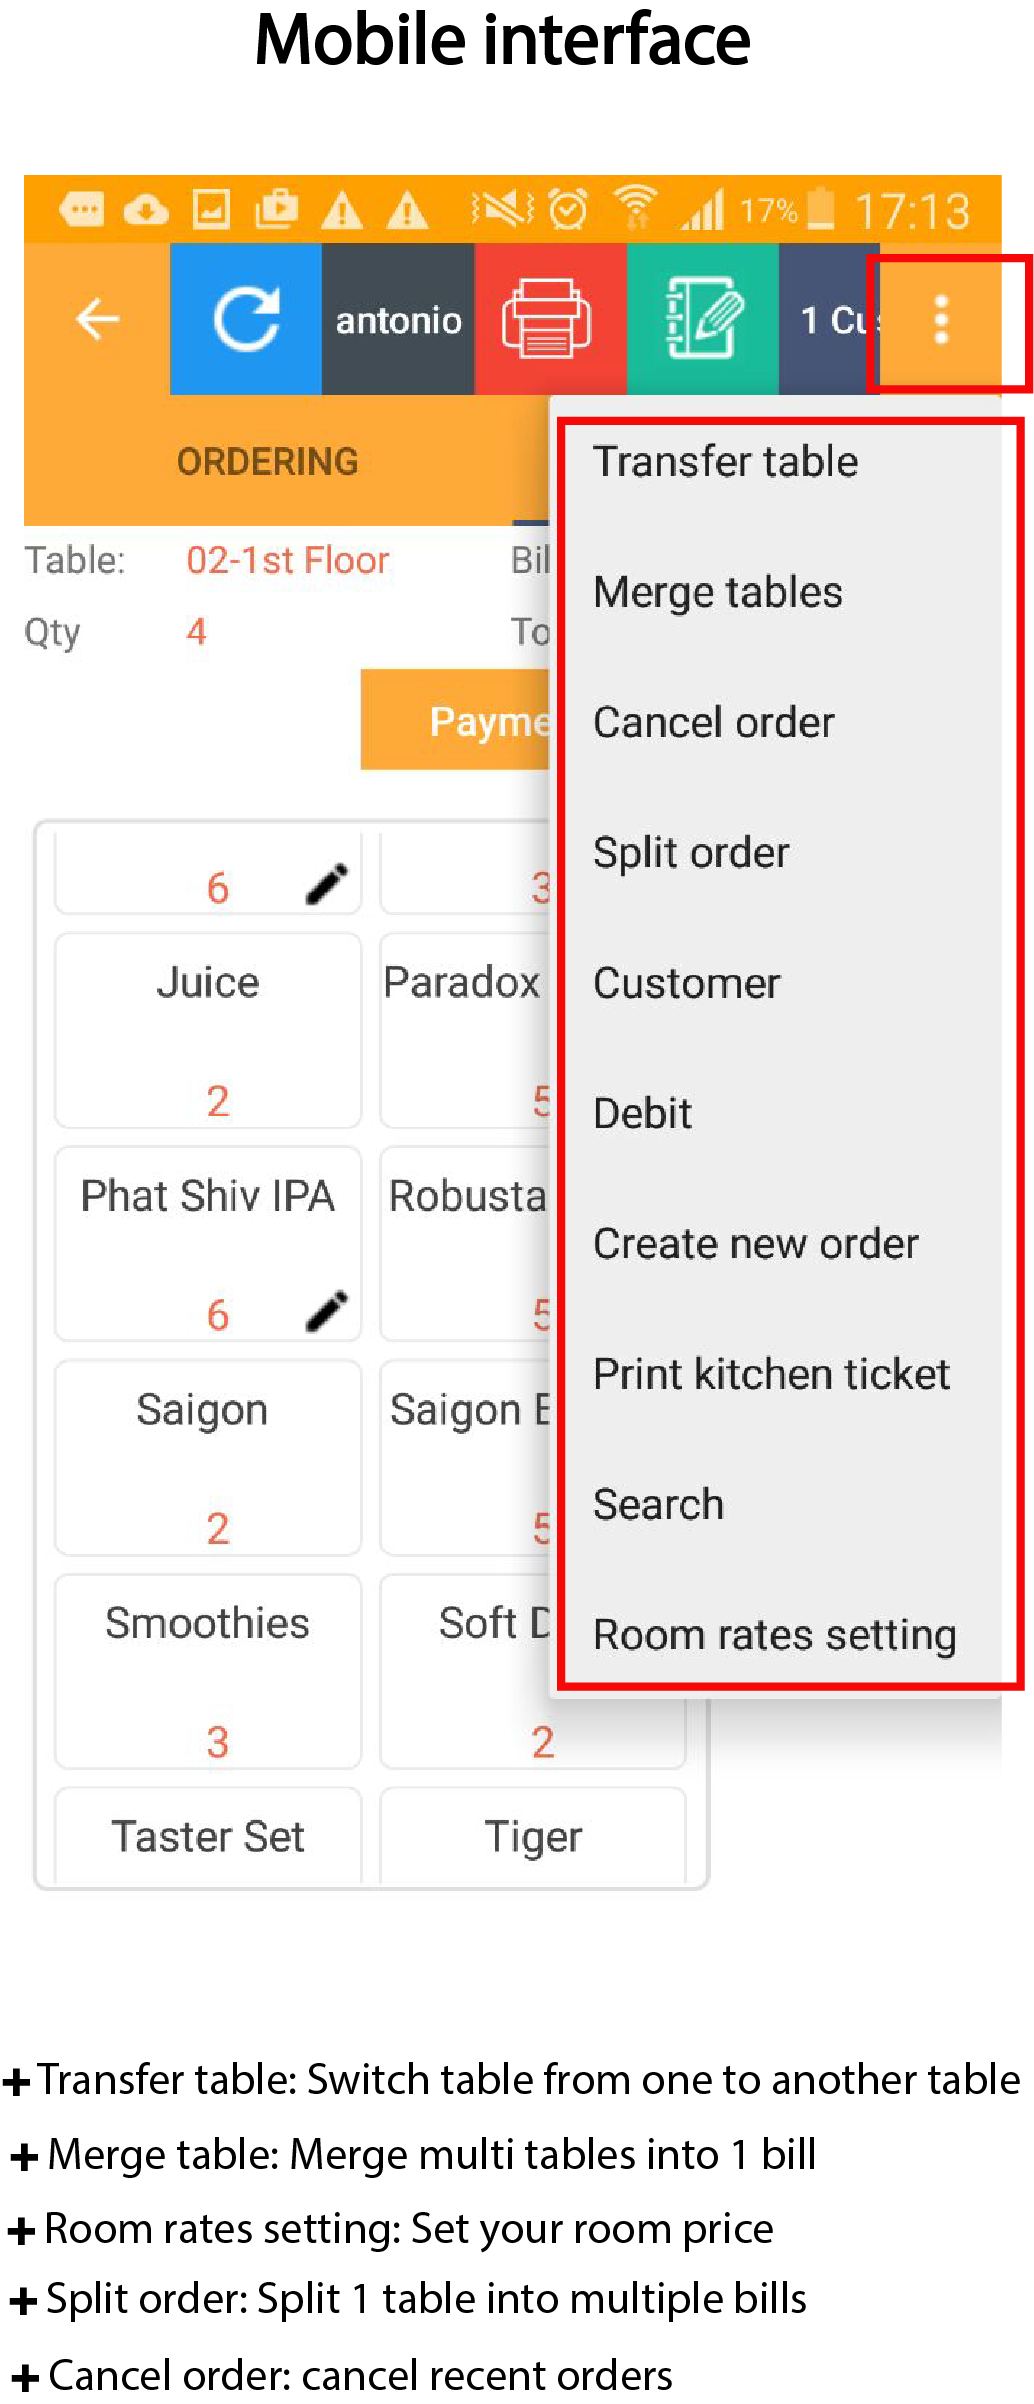 posapp's mobile interface